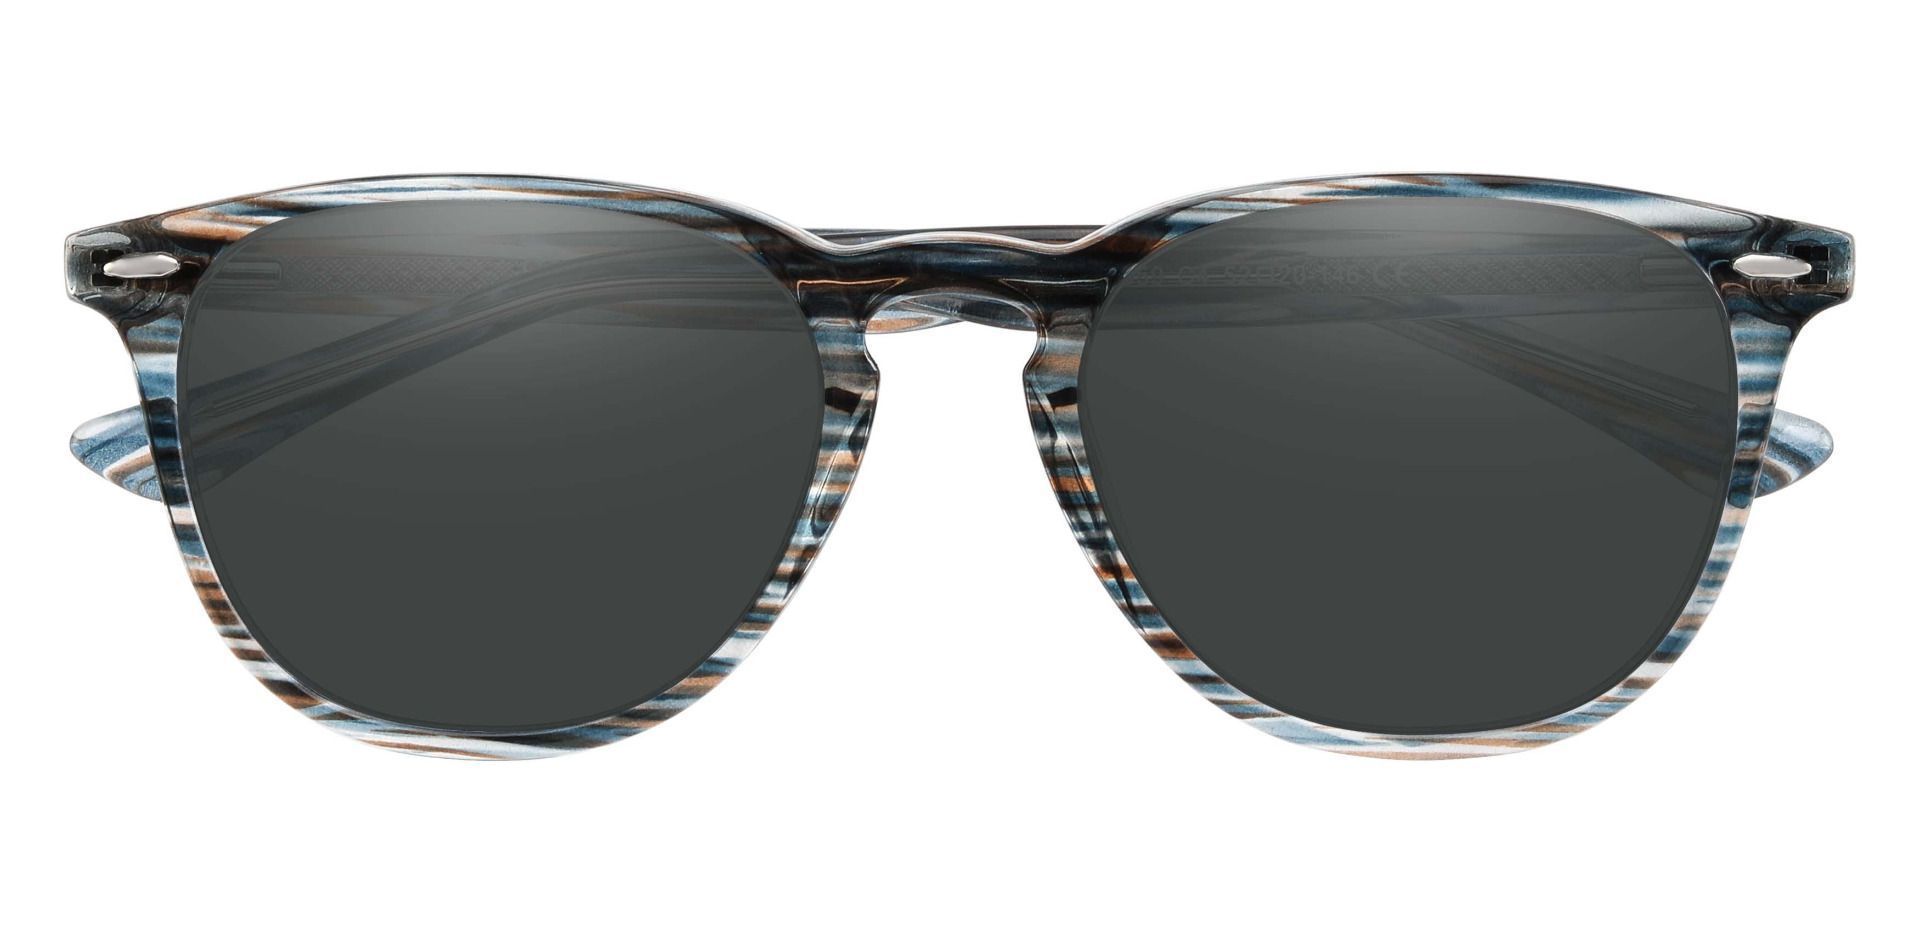 Sycamore Oval Prescription Sunglasses - Blue Frame With Gray Lenses